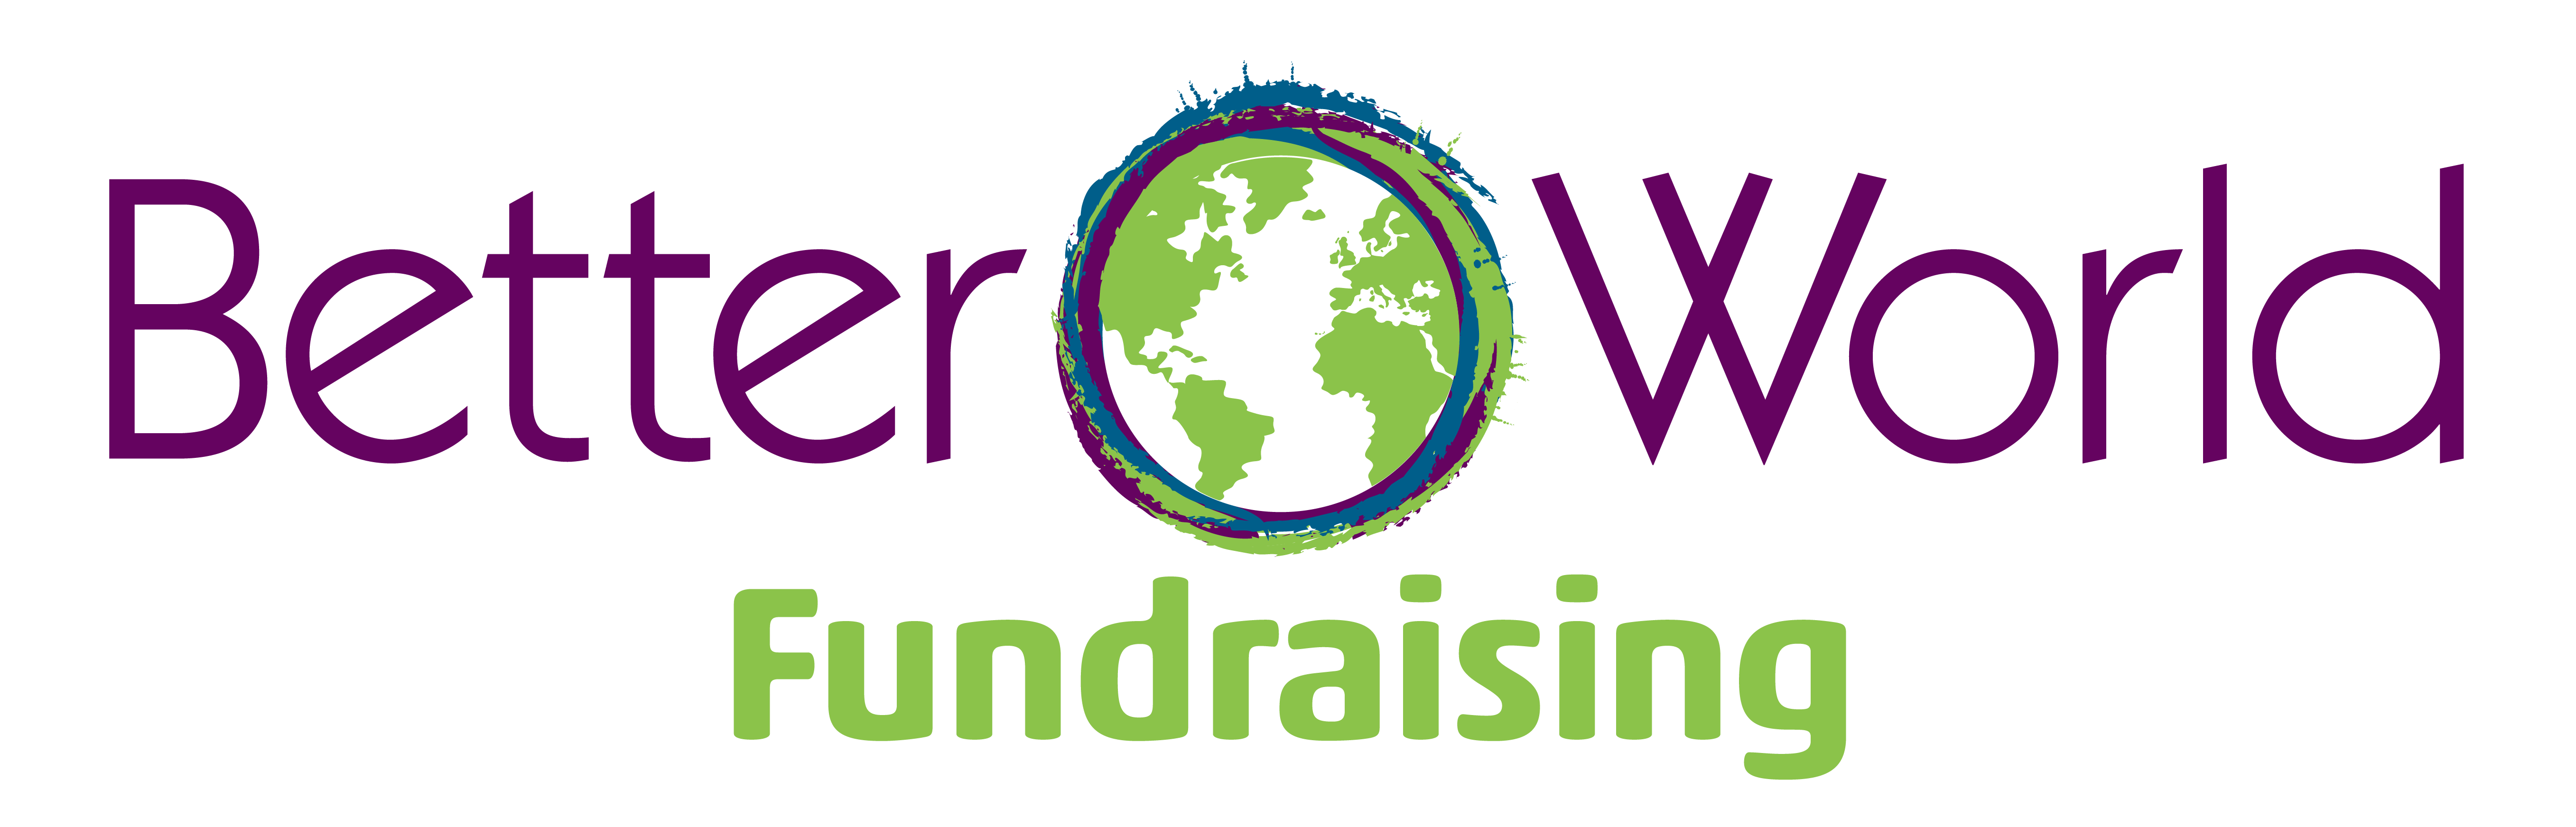 Better World Fundraising